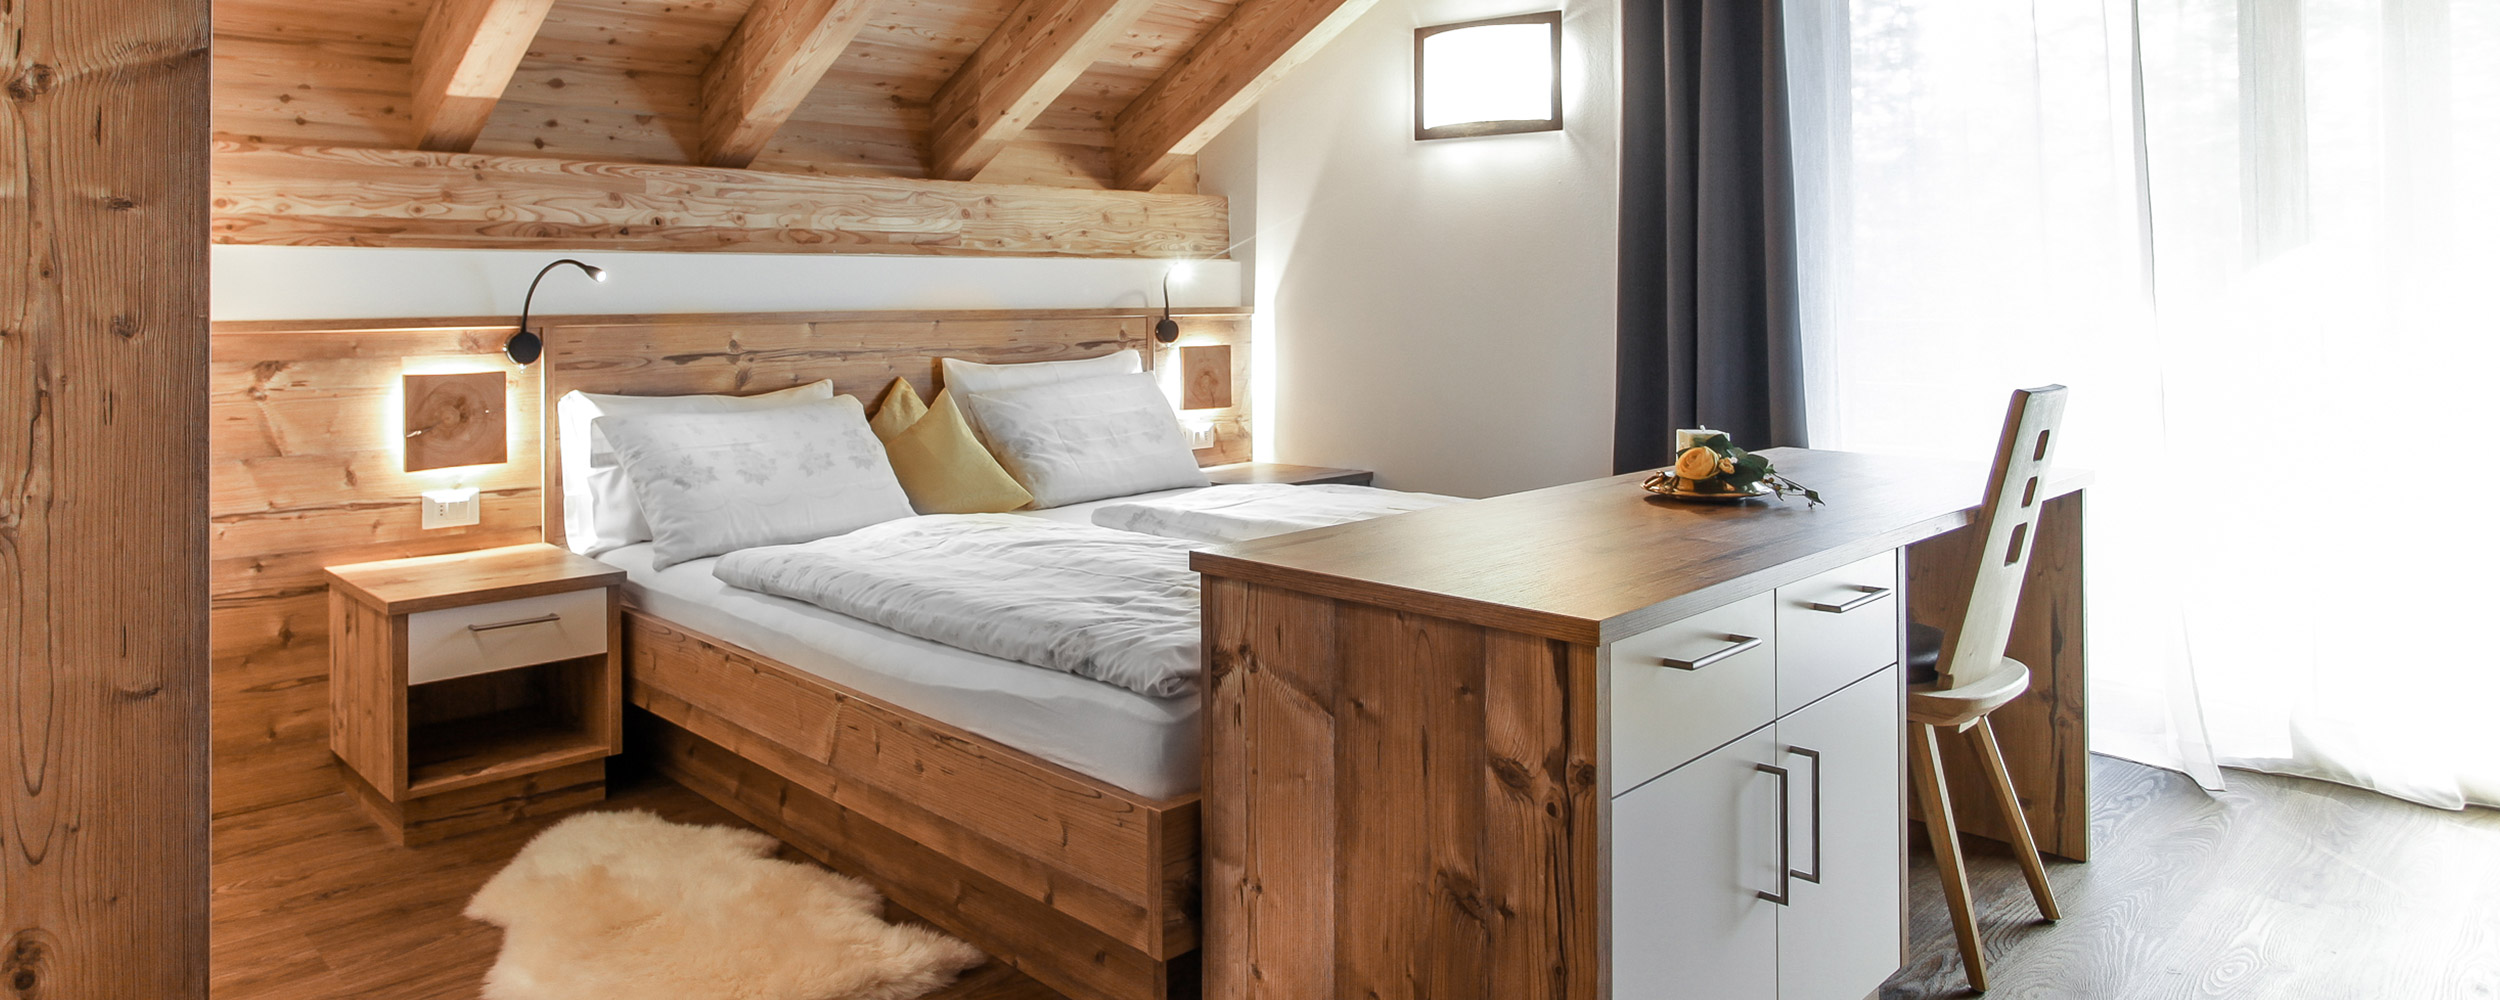 Badezimmer Wood - Appartement Ladinia in St. Kassian in Südtirol